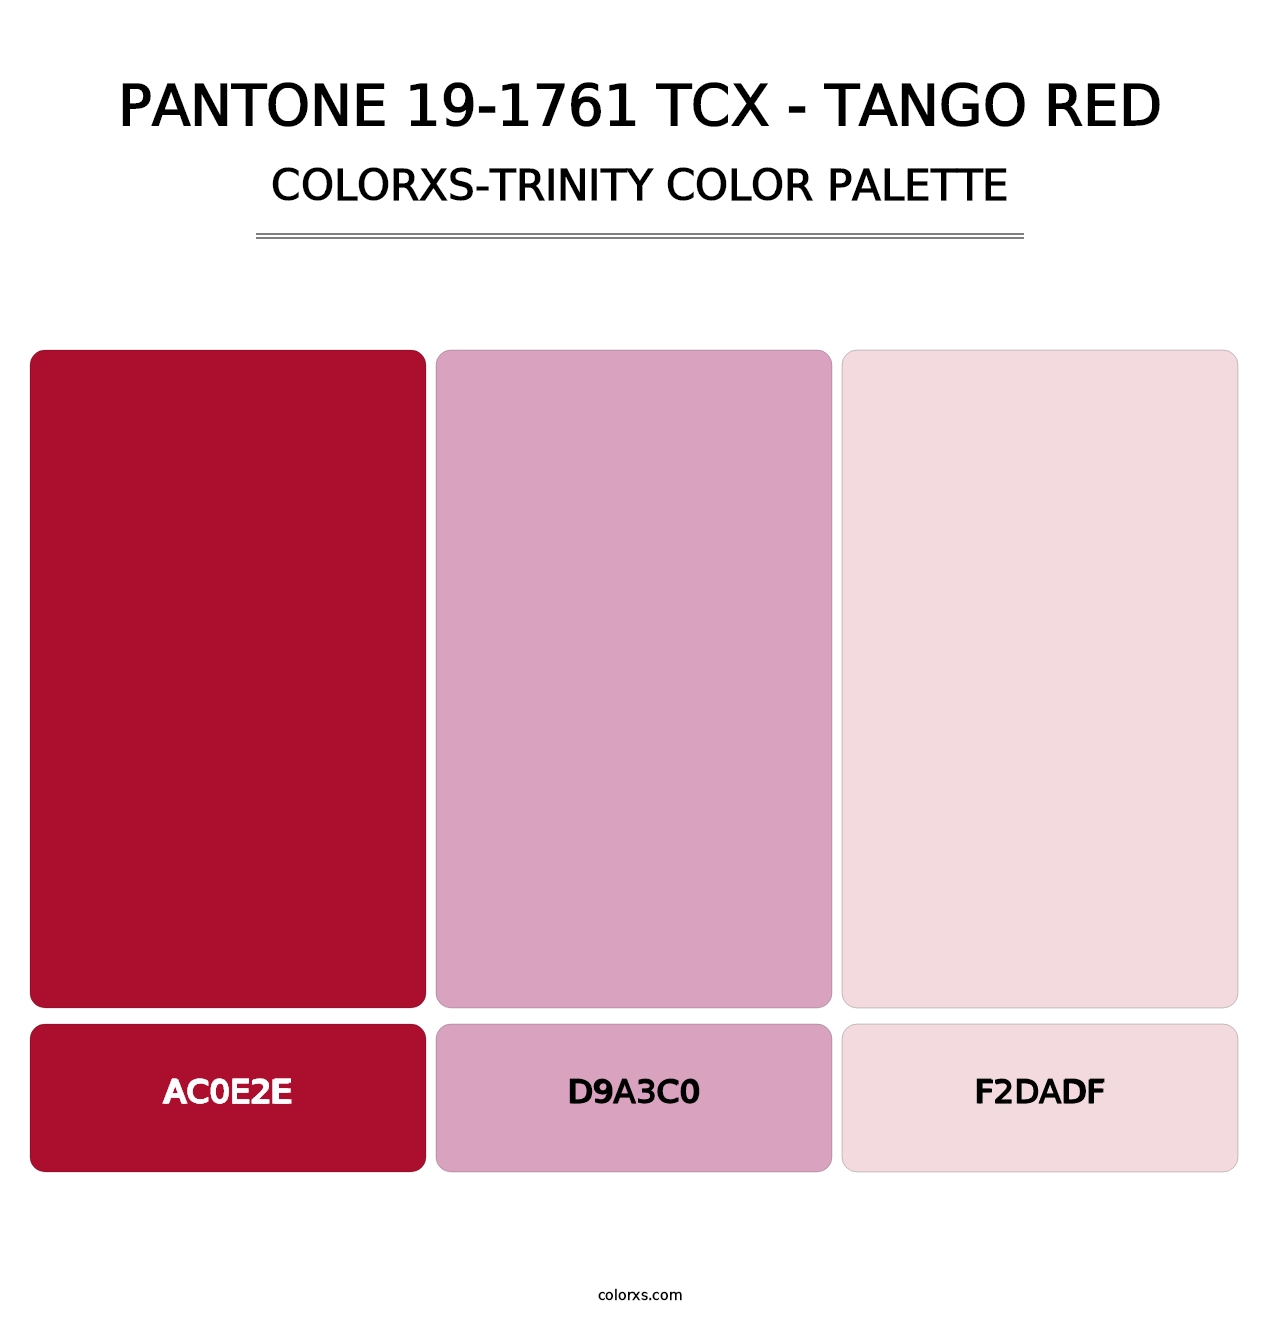 PANTONE 19-1761 TCX - Tango Red - Colorxs Trinity Palette